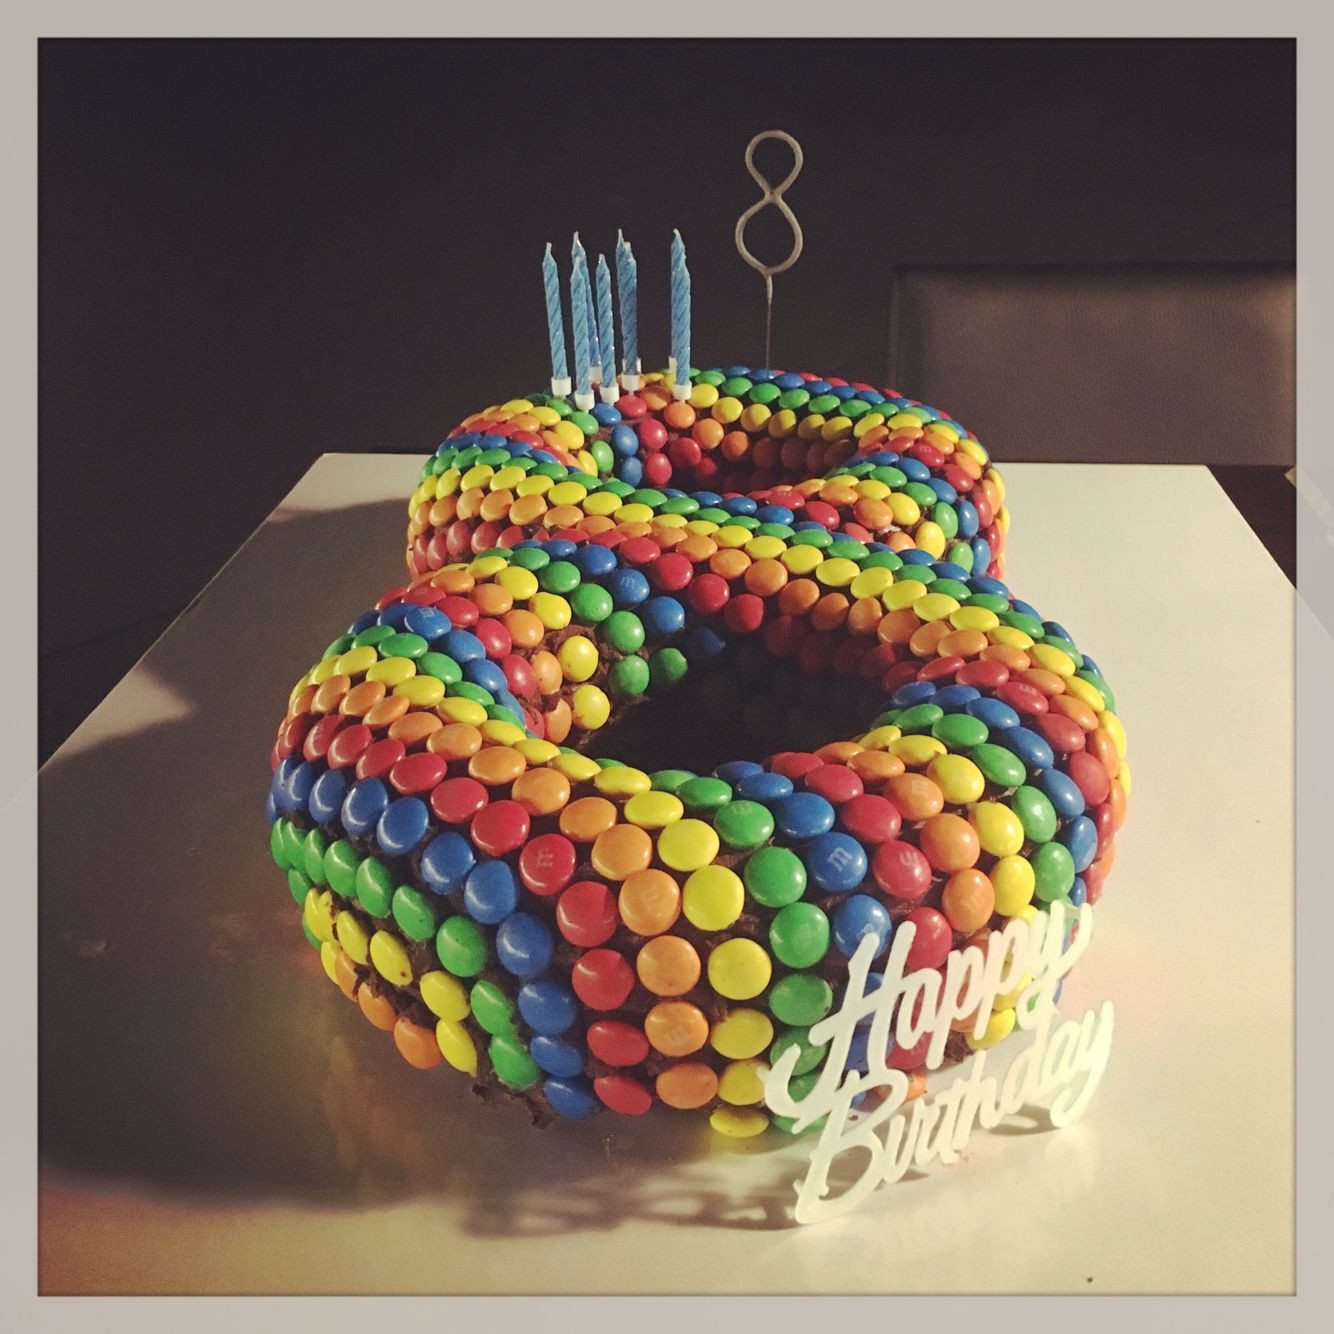 8 Year Old Birthday Party Ideas
 Rainbow M&M s birthday cake 8 years old